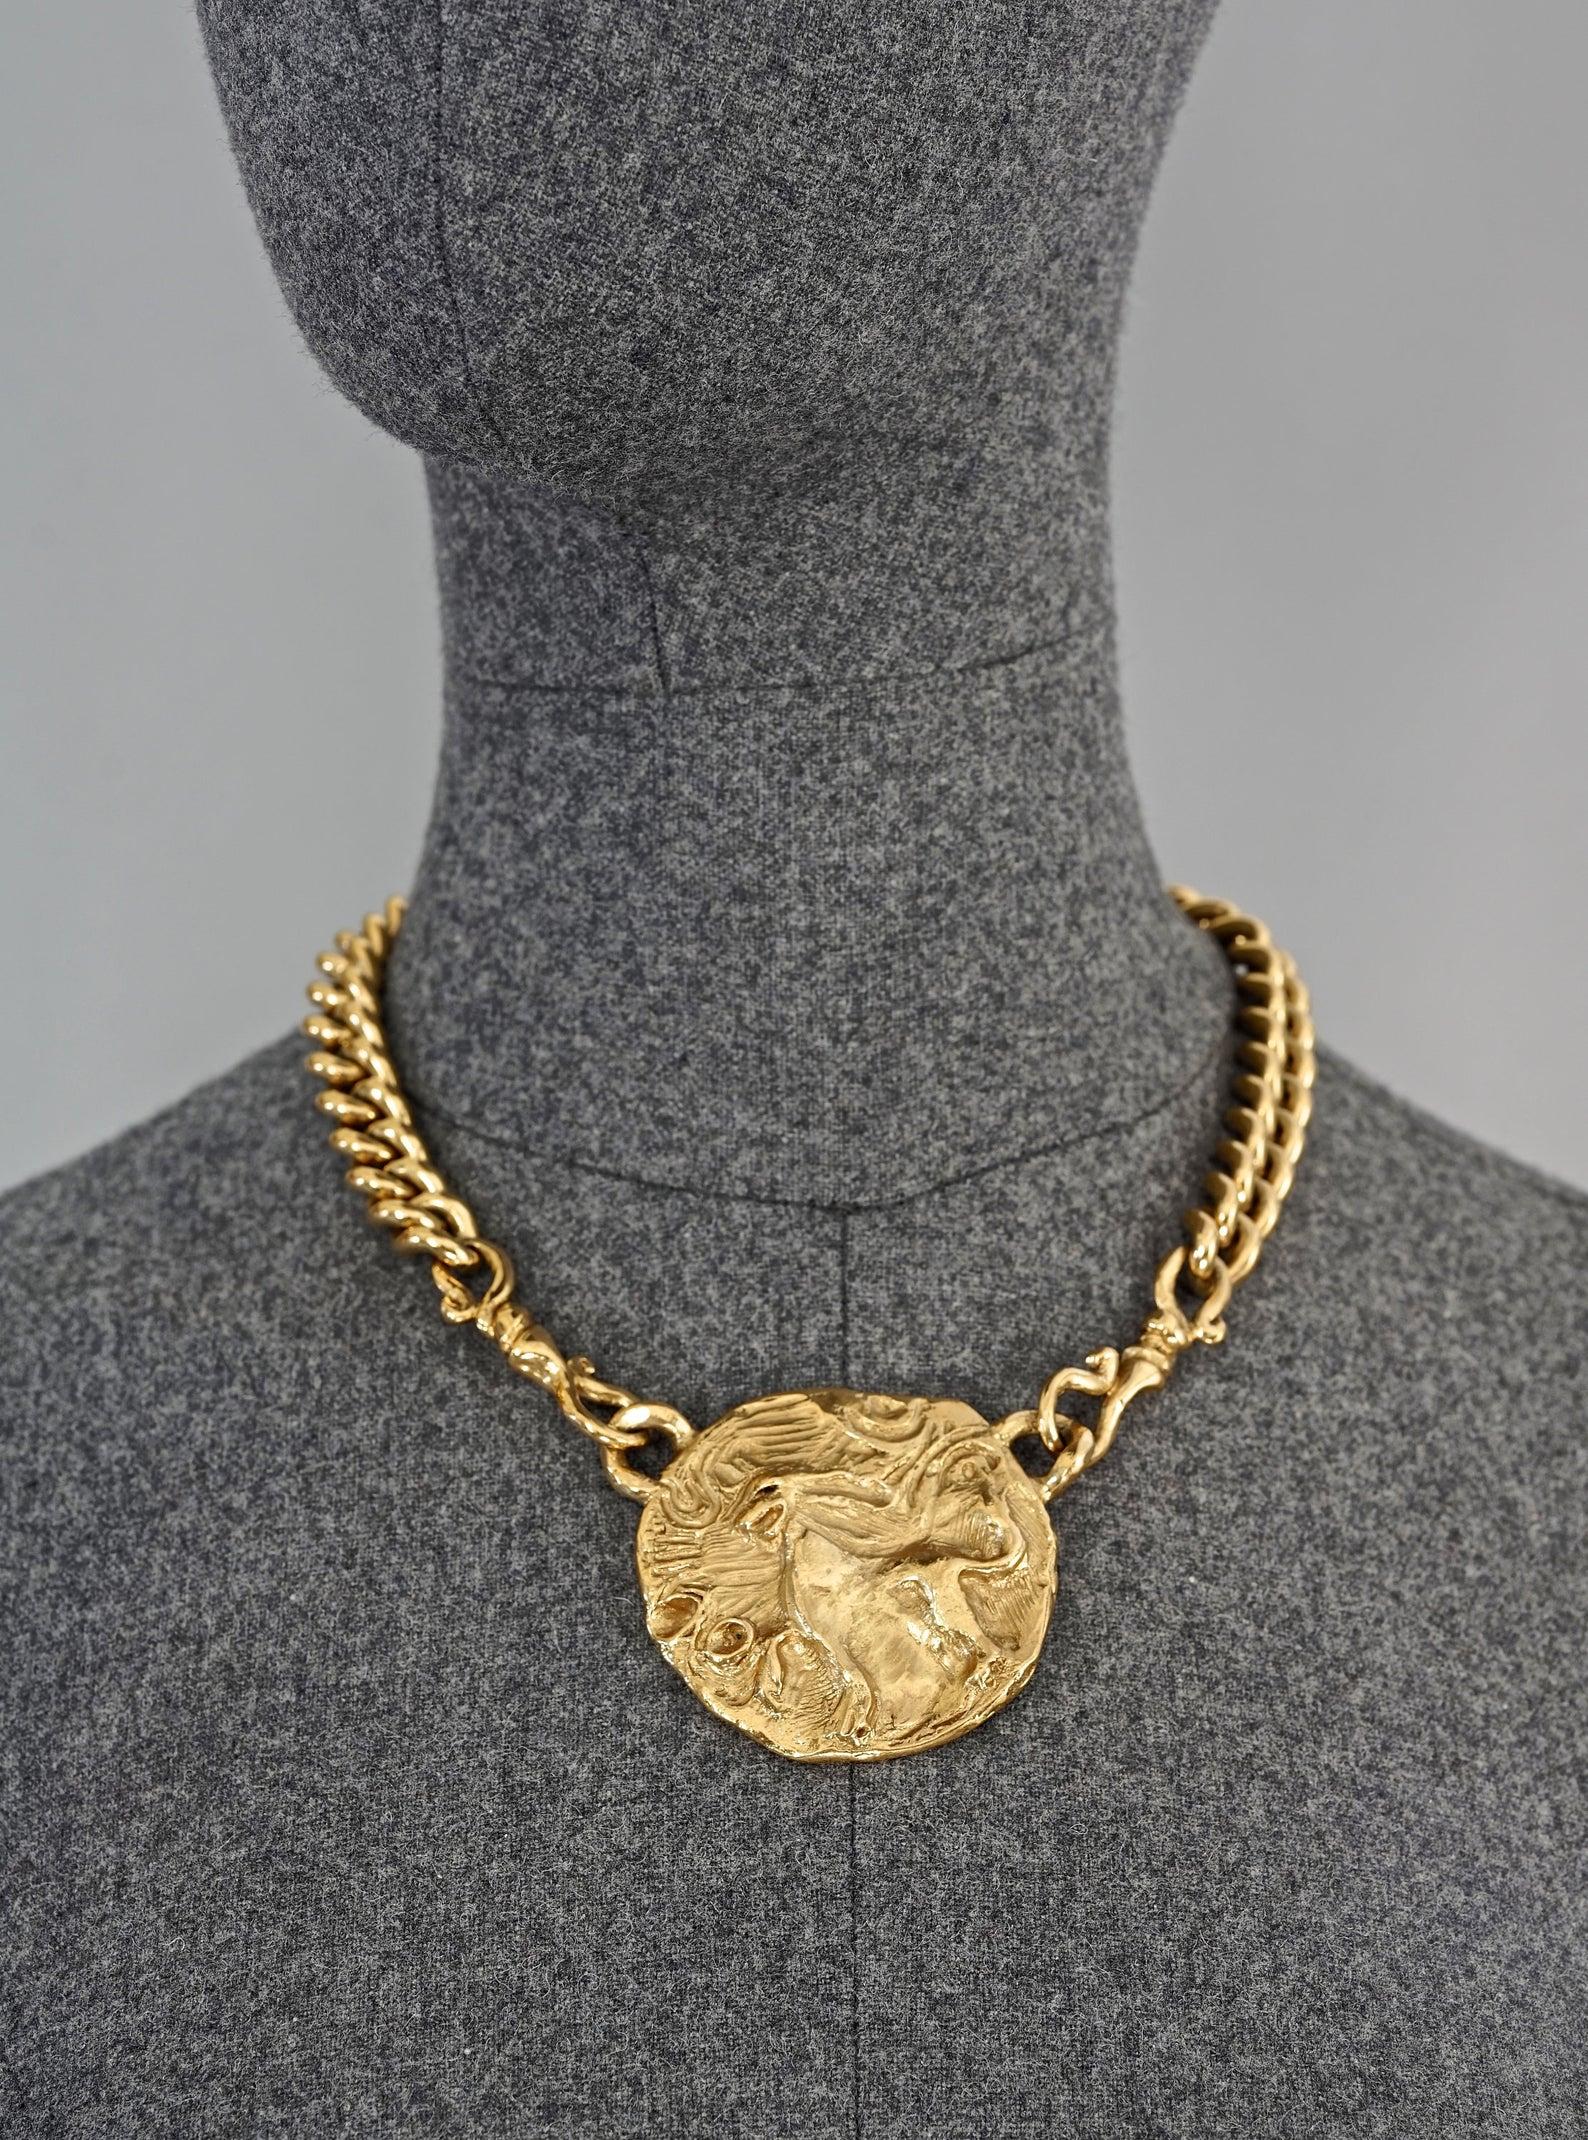 Vintage YSL Yves Saint Laurent by Robert Goossens Lion Medallion Necklace

Measurements:
Lion Medallion: 2 1/8 inches (5.39 cm)
Wearable Length: 15 inches 38.10 cm) to 17.5 inches (44.45 cm)

Features:
- 100% Authentic YVES SAINT LAURENT by Robert